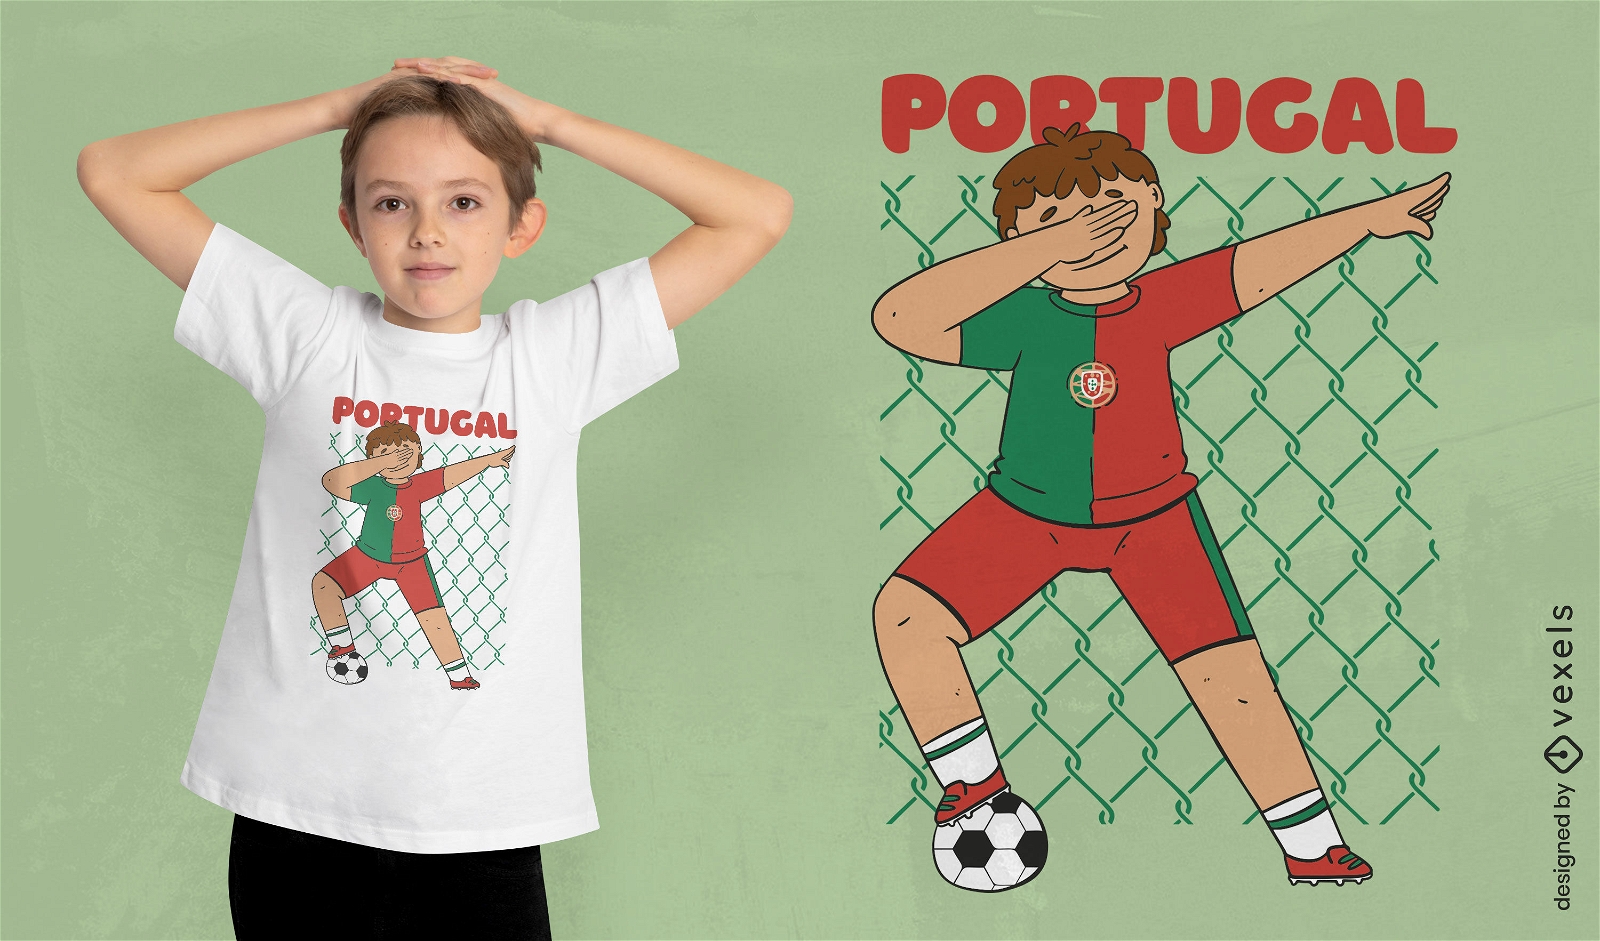 Portugal soccer player kid t-shirt design